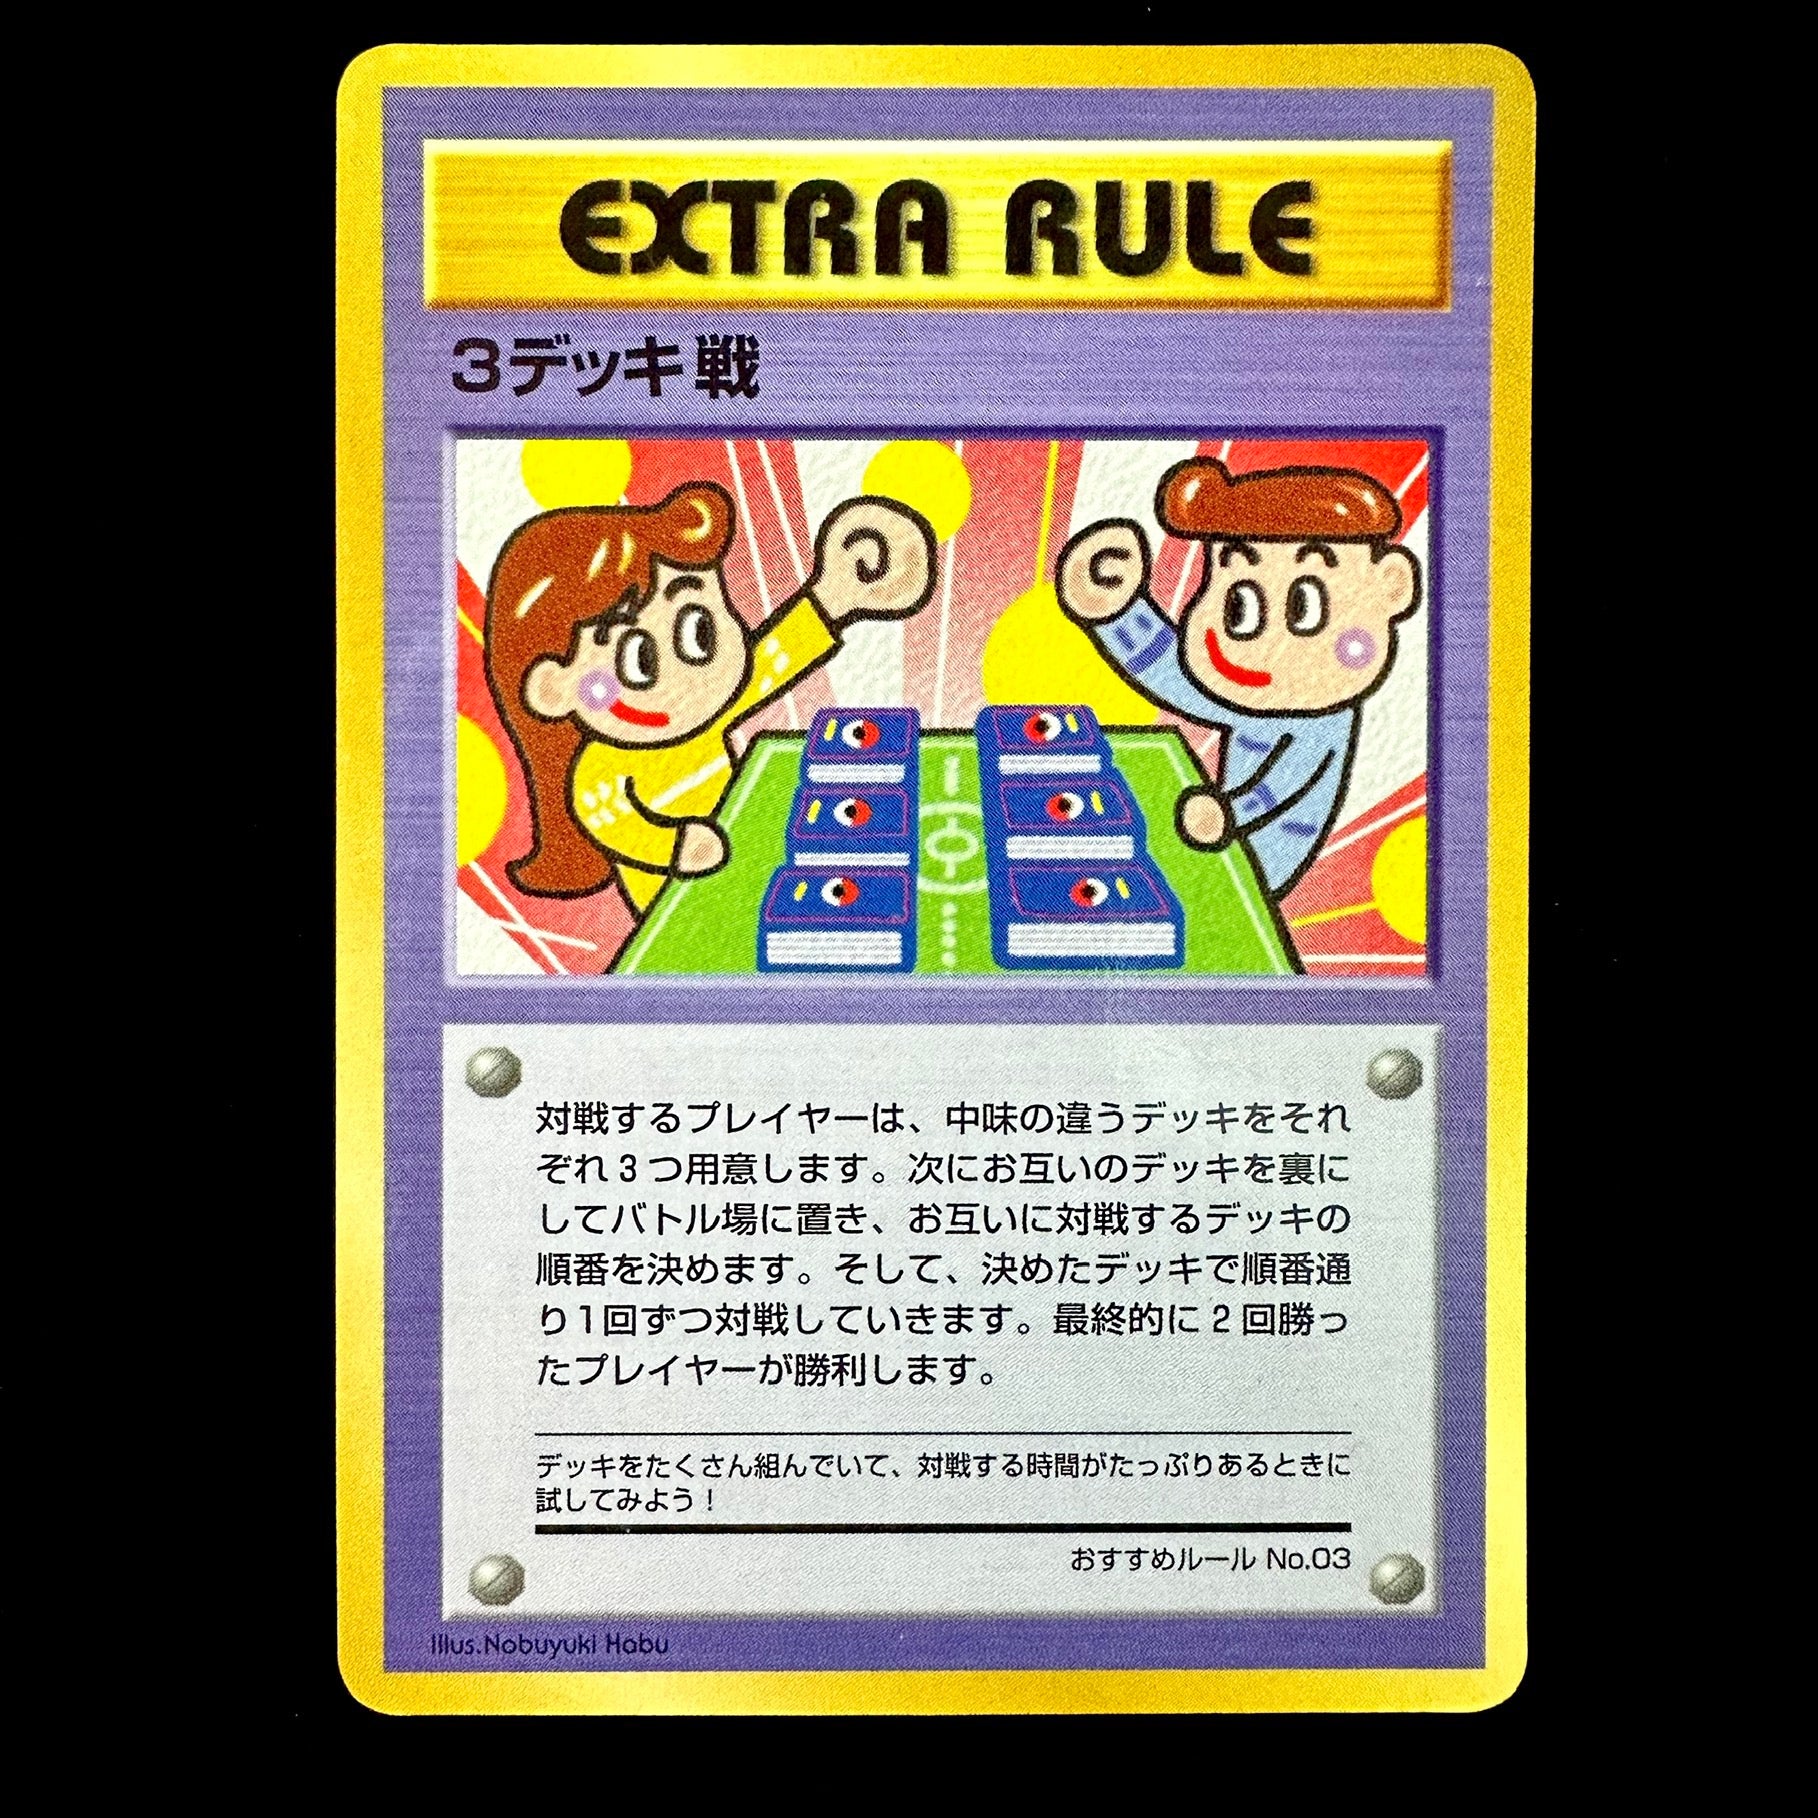 Pokémon Card Game "EXTRA RULE" No.03